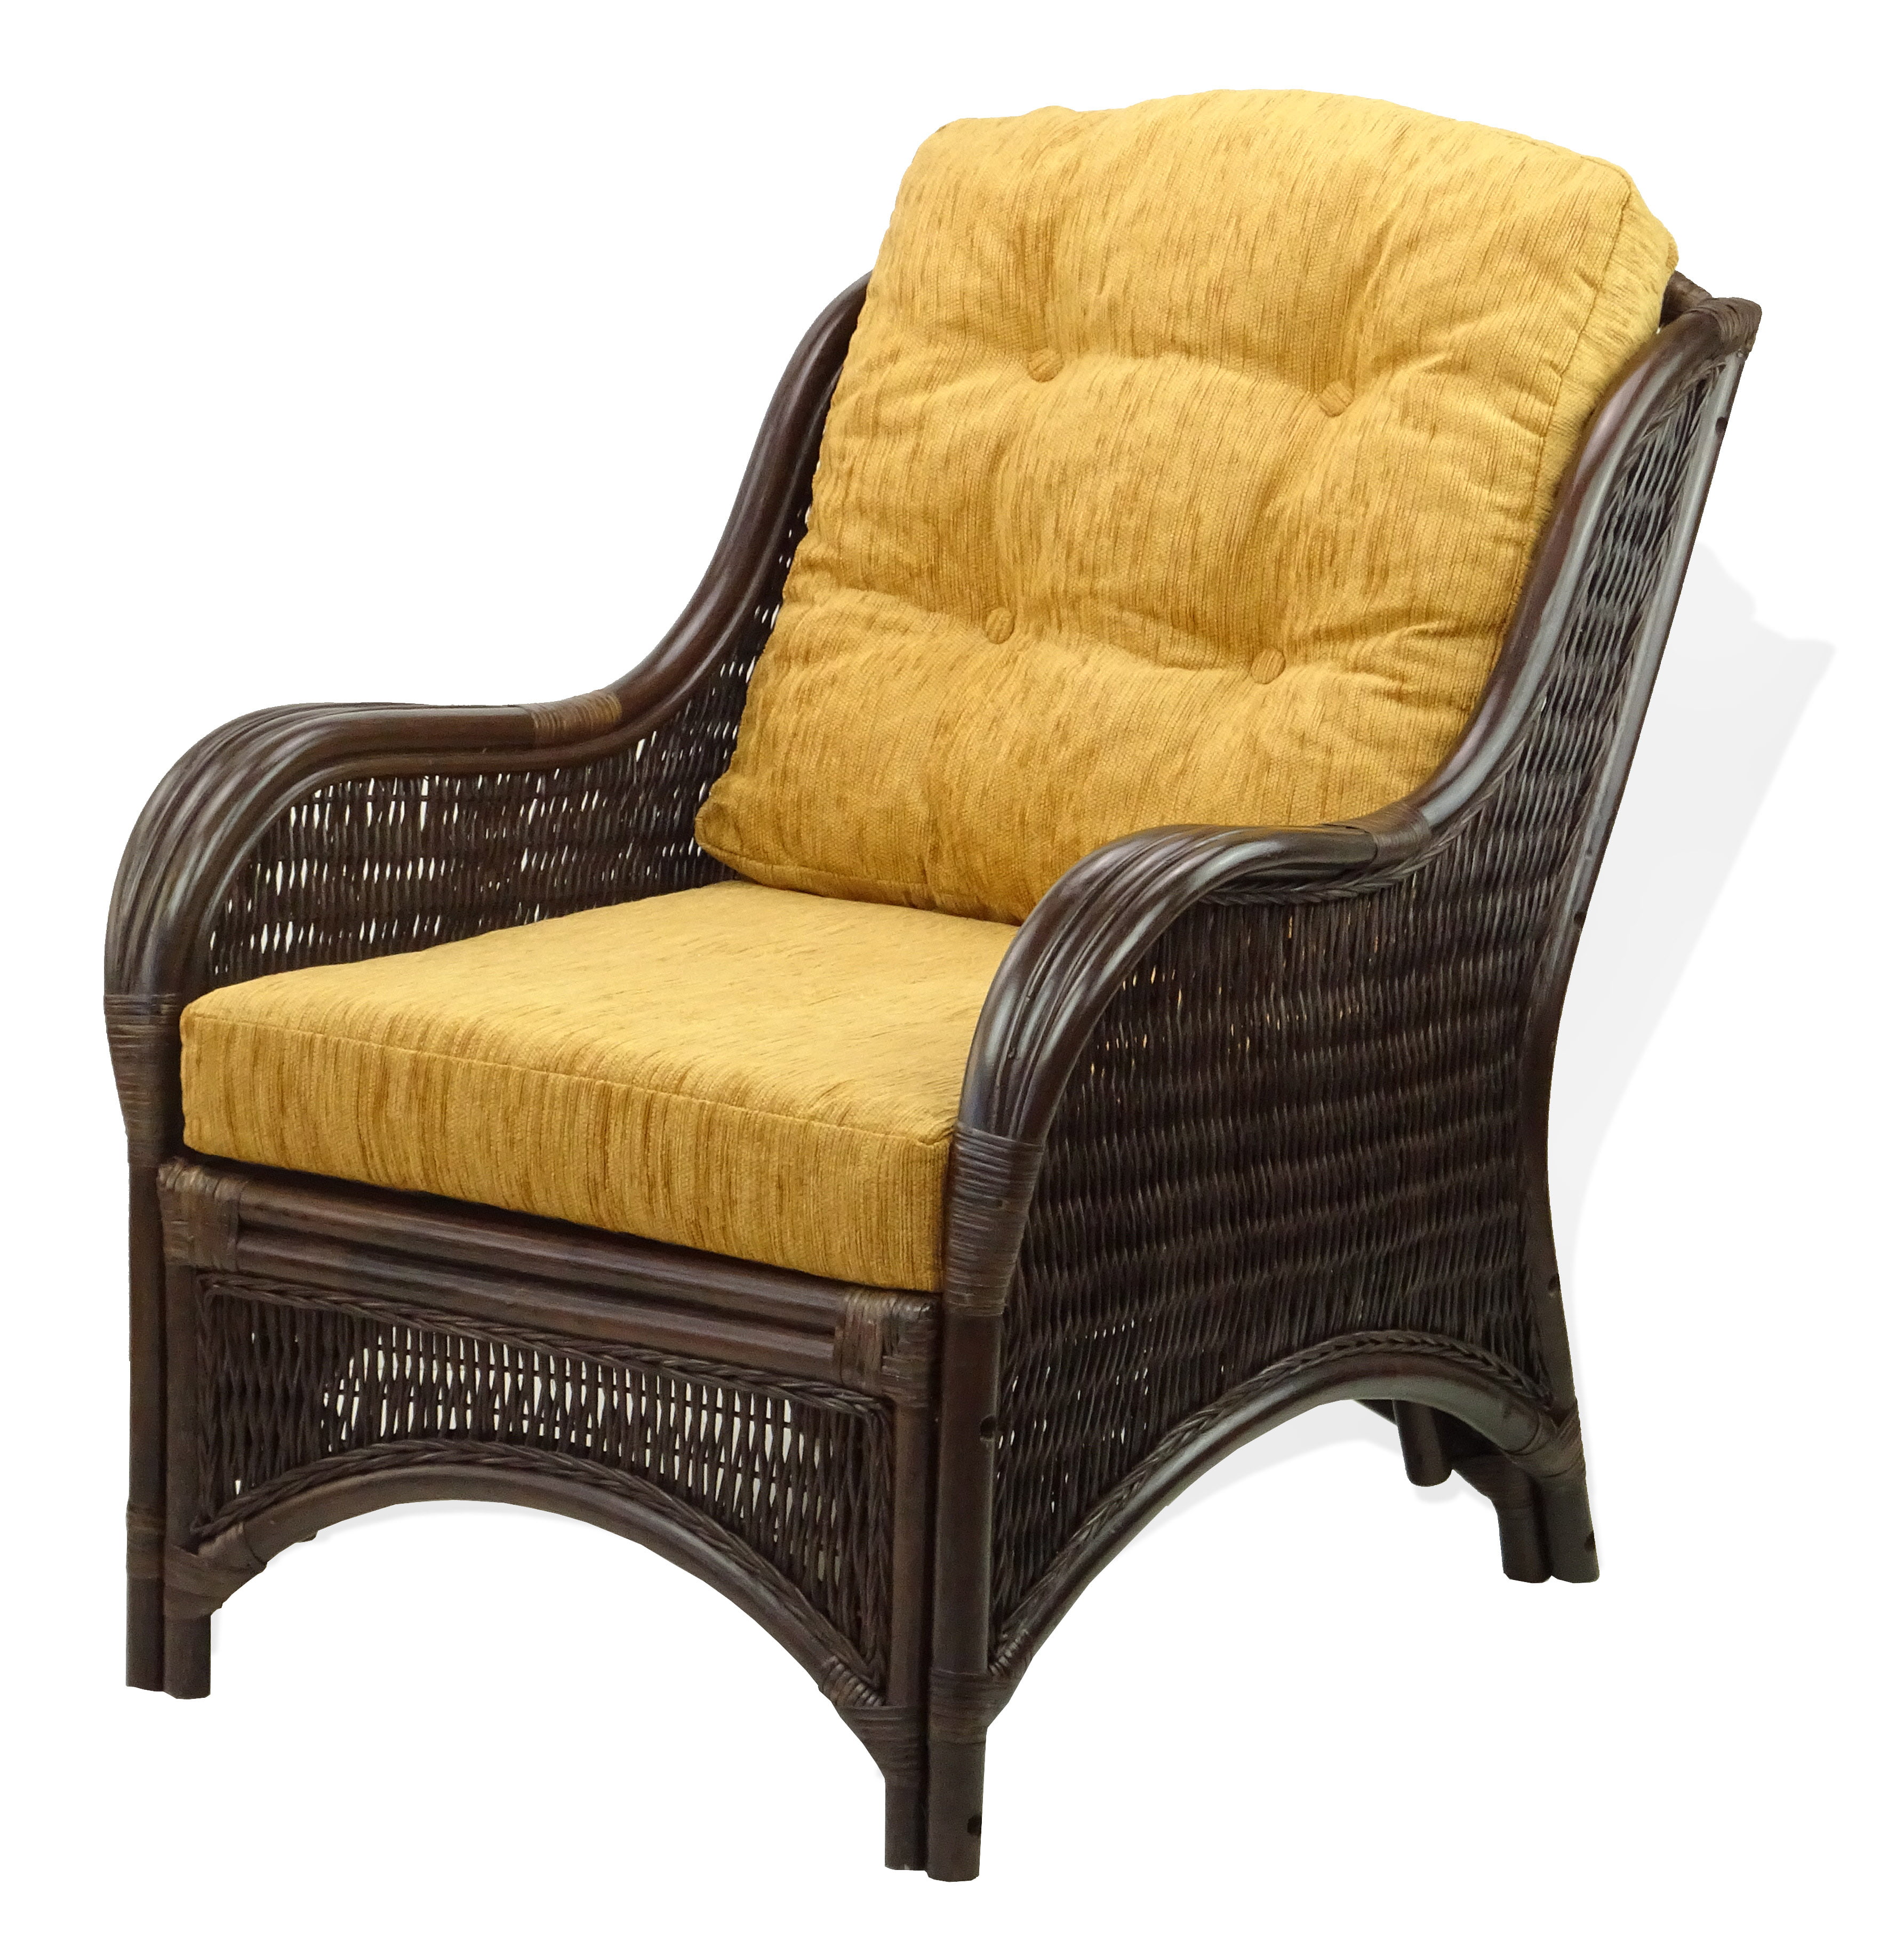 SunBear Furniture Lounge Jam Arm Chair ECO Natural Handmade Rattan Wicker with White Cushions Gognac Light Brown